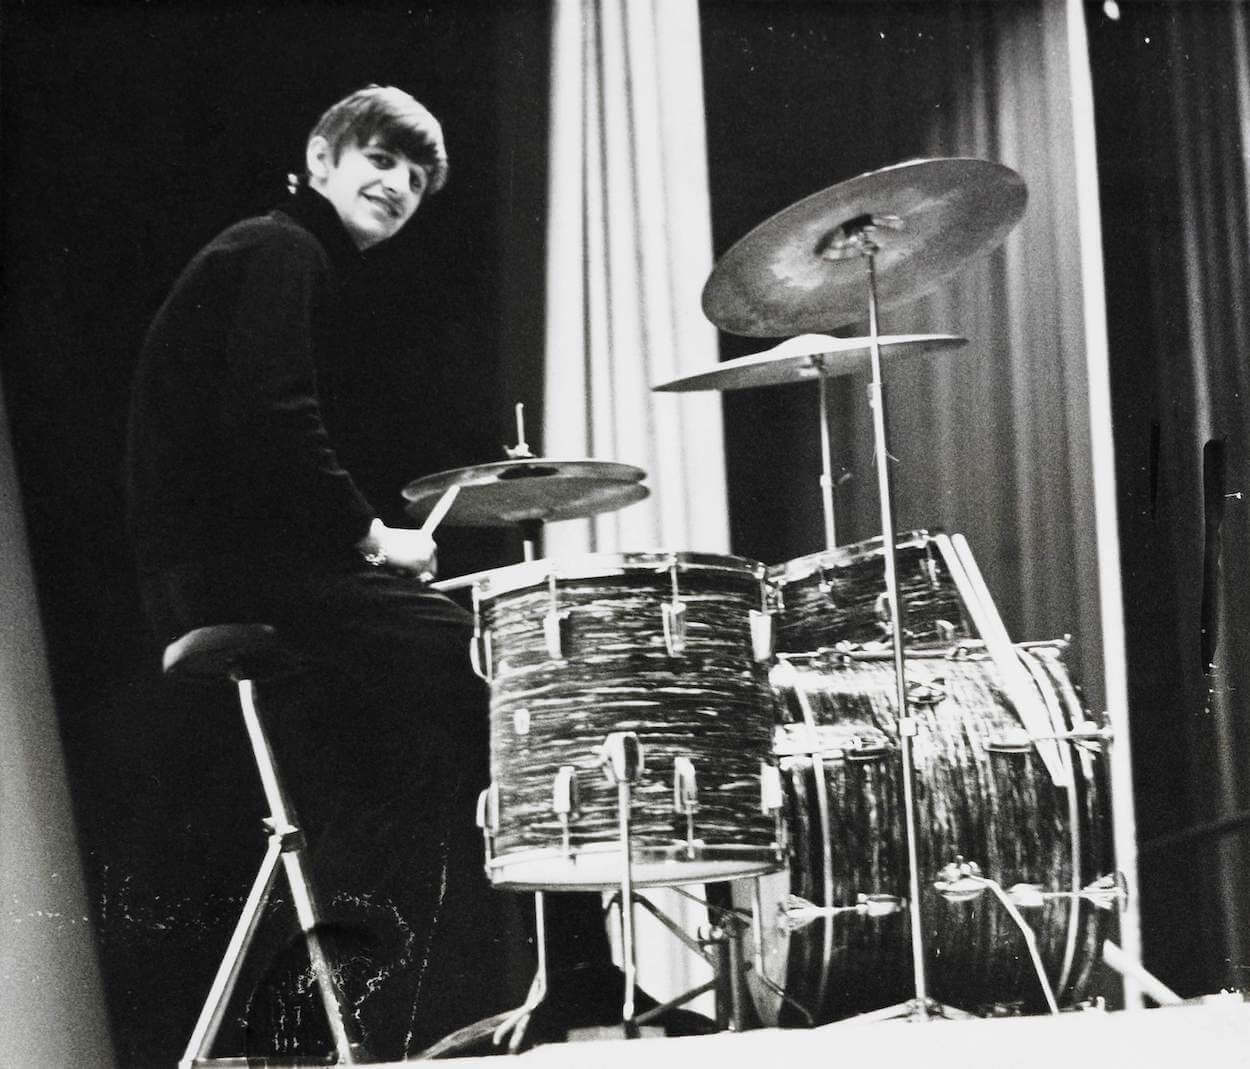 Beatles drummer Ringo Starr sitting behind his kit and smiling at the camera circa 1963.